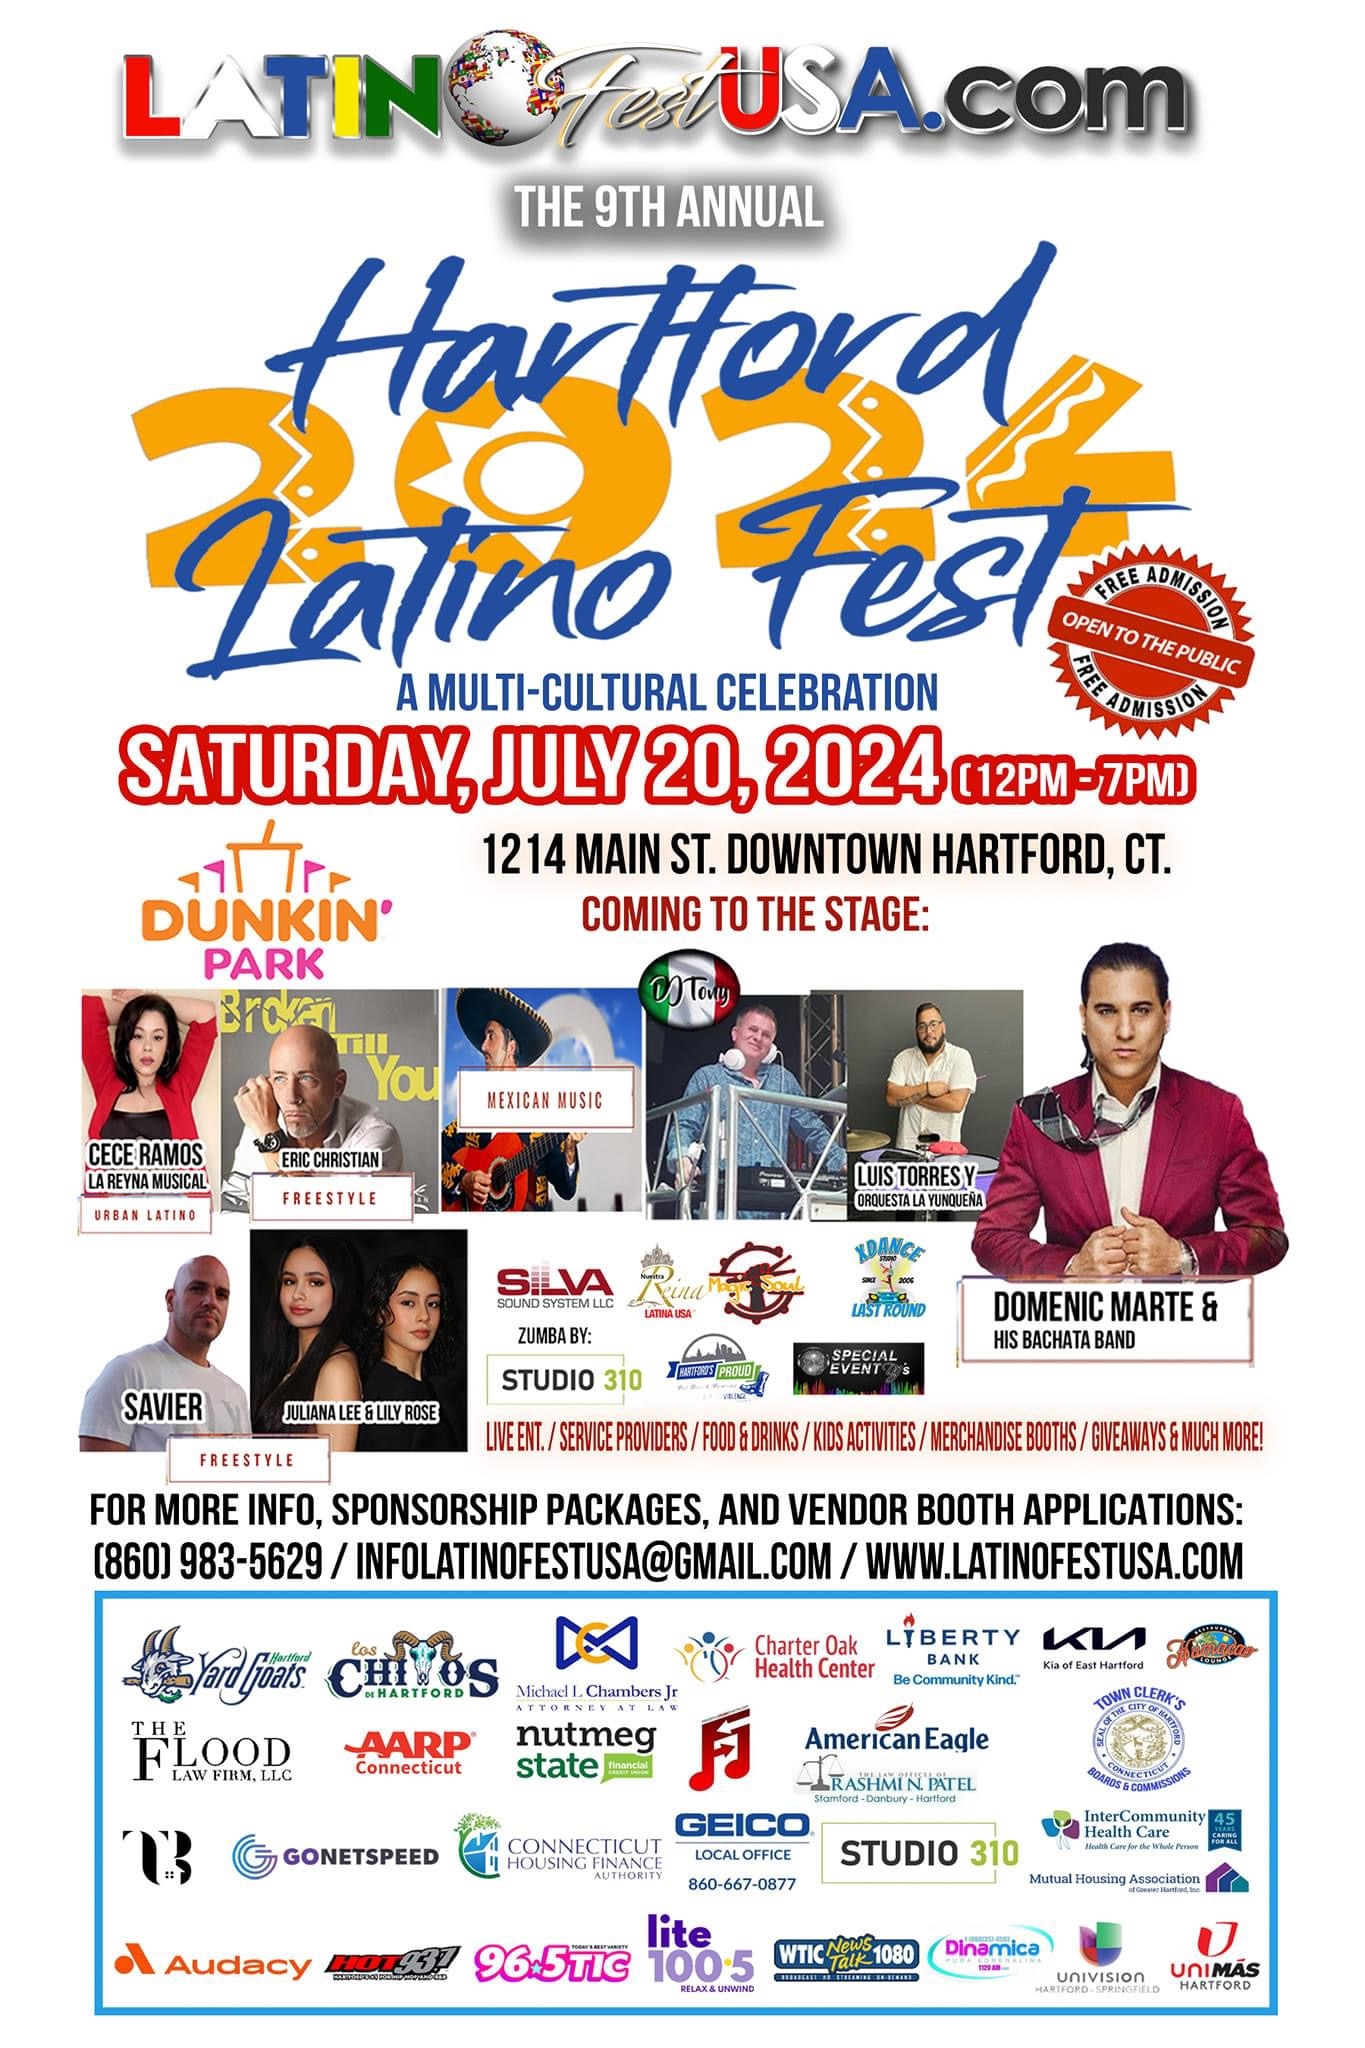 Hartford Latino Fest